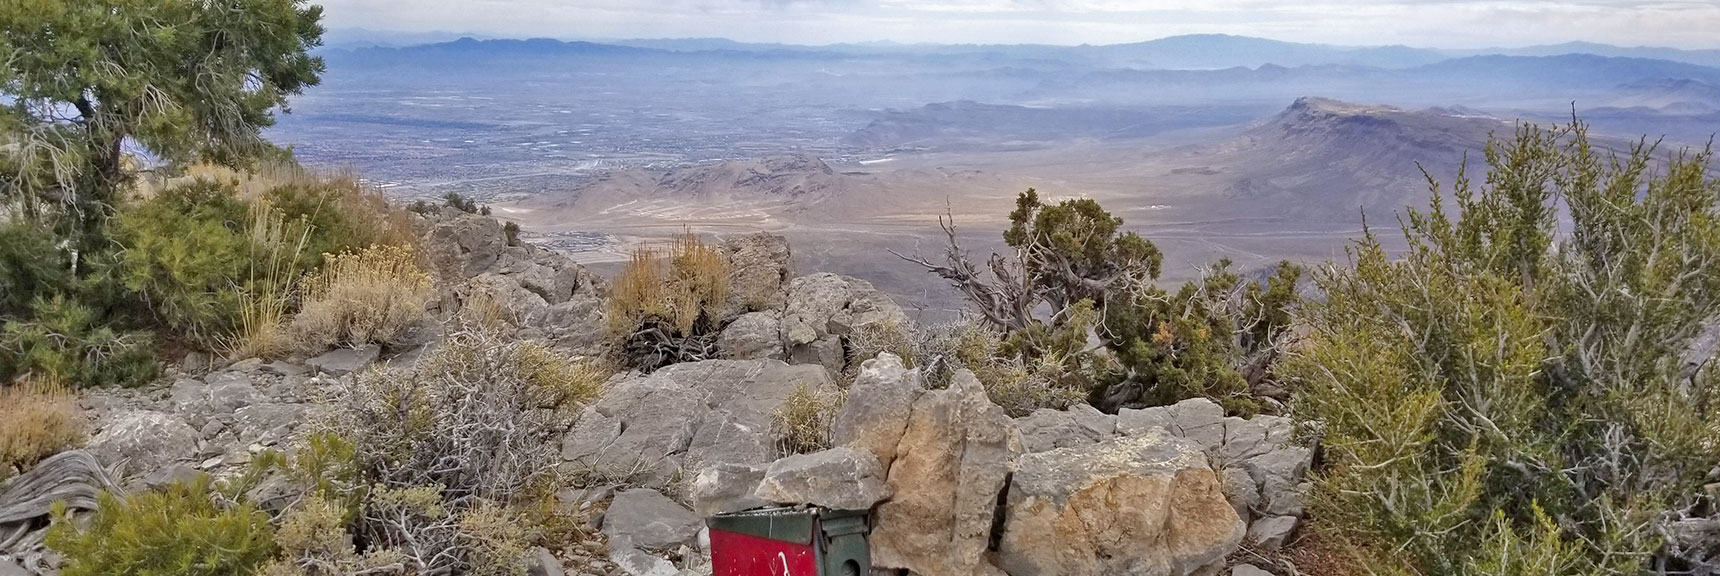 Damsel Peak Summit in Calico Basin, Nevada 002